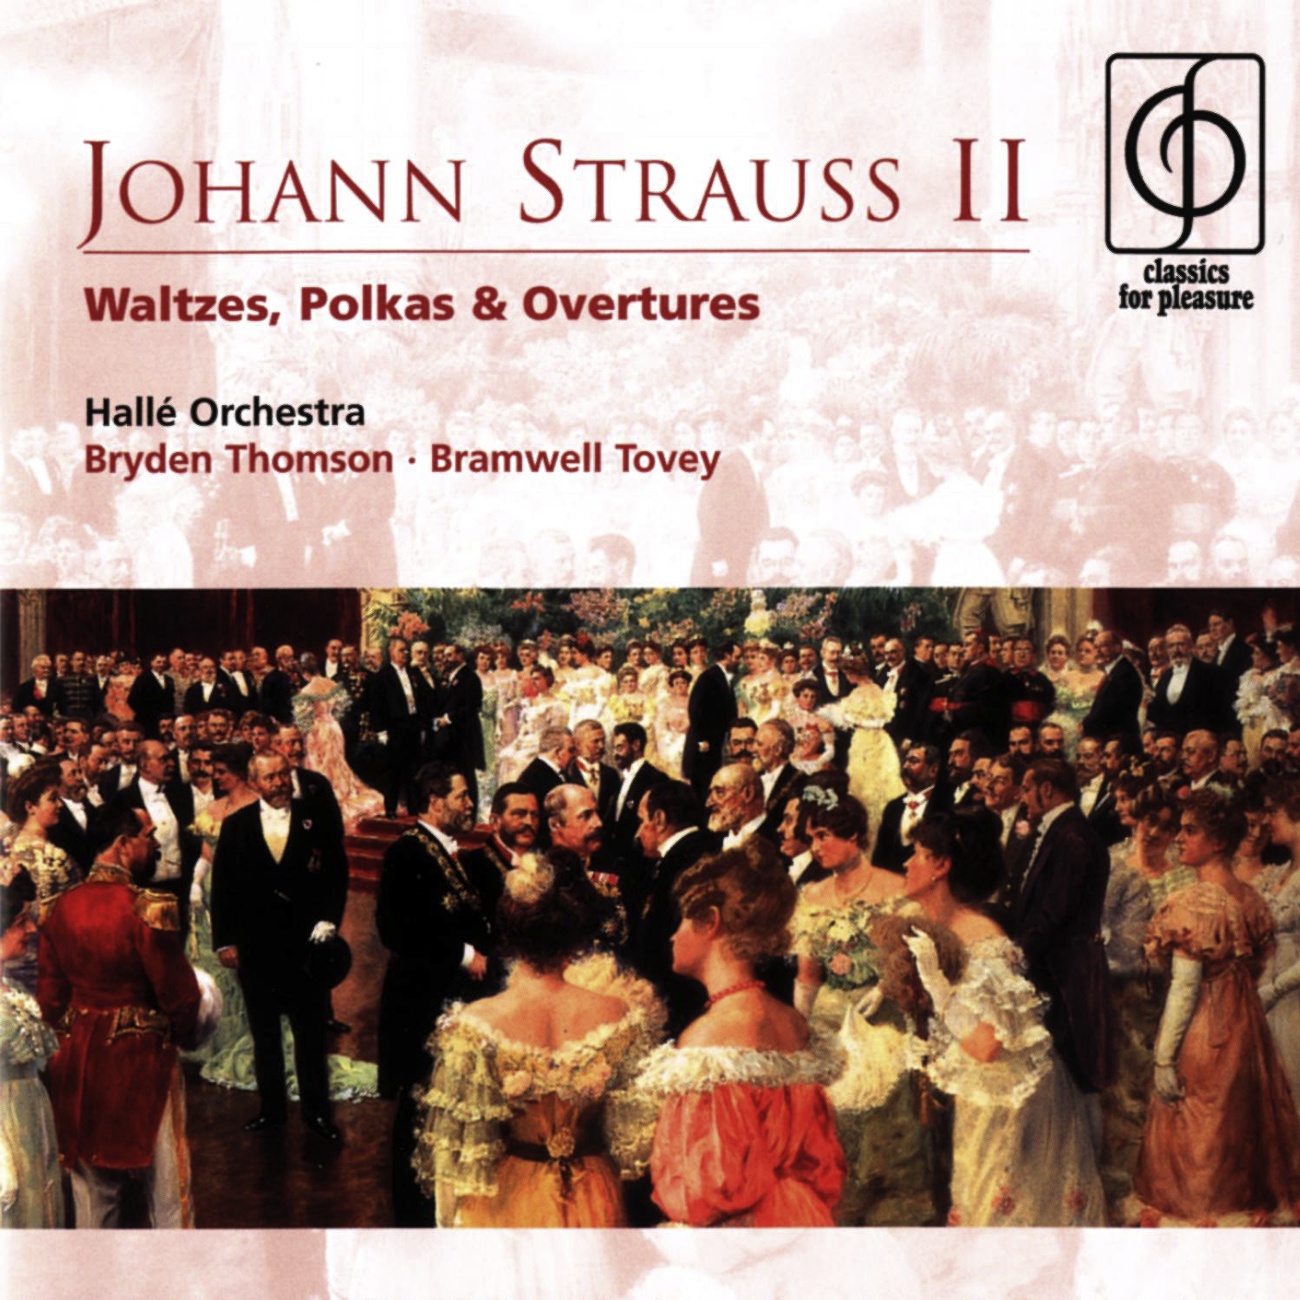 Voices of Spring - Waltz Op. 410